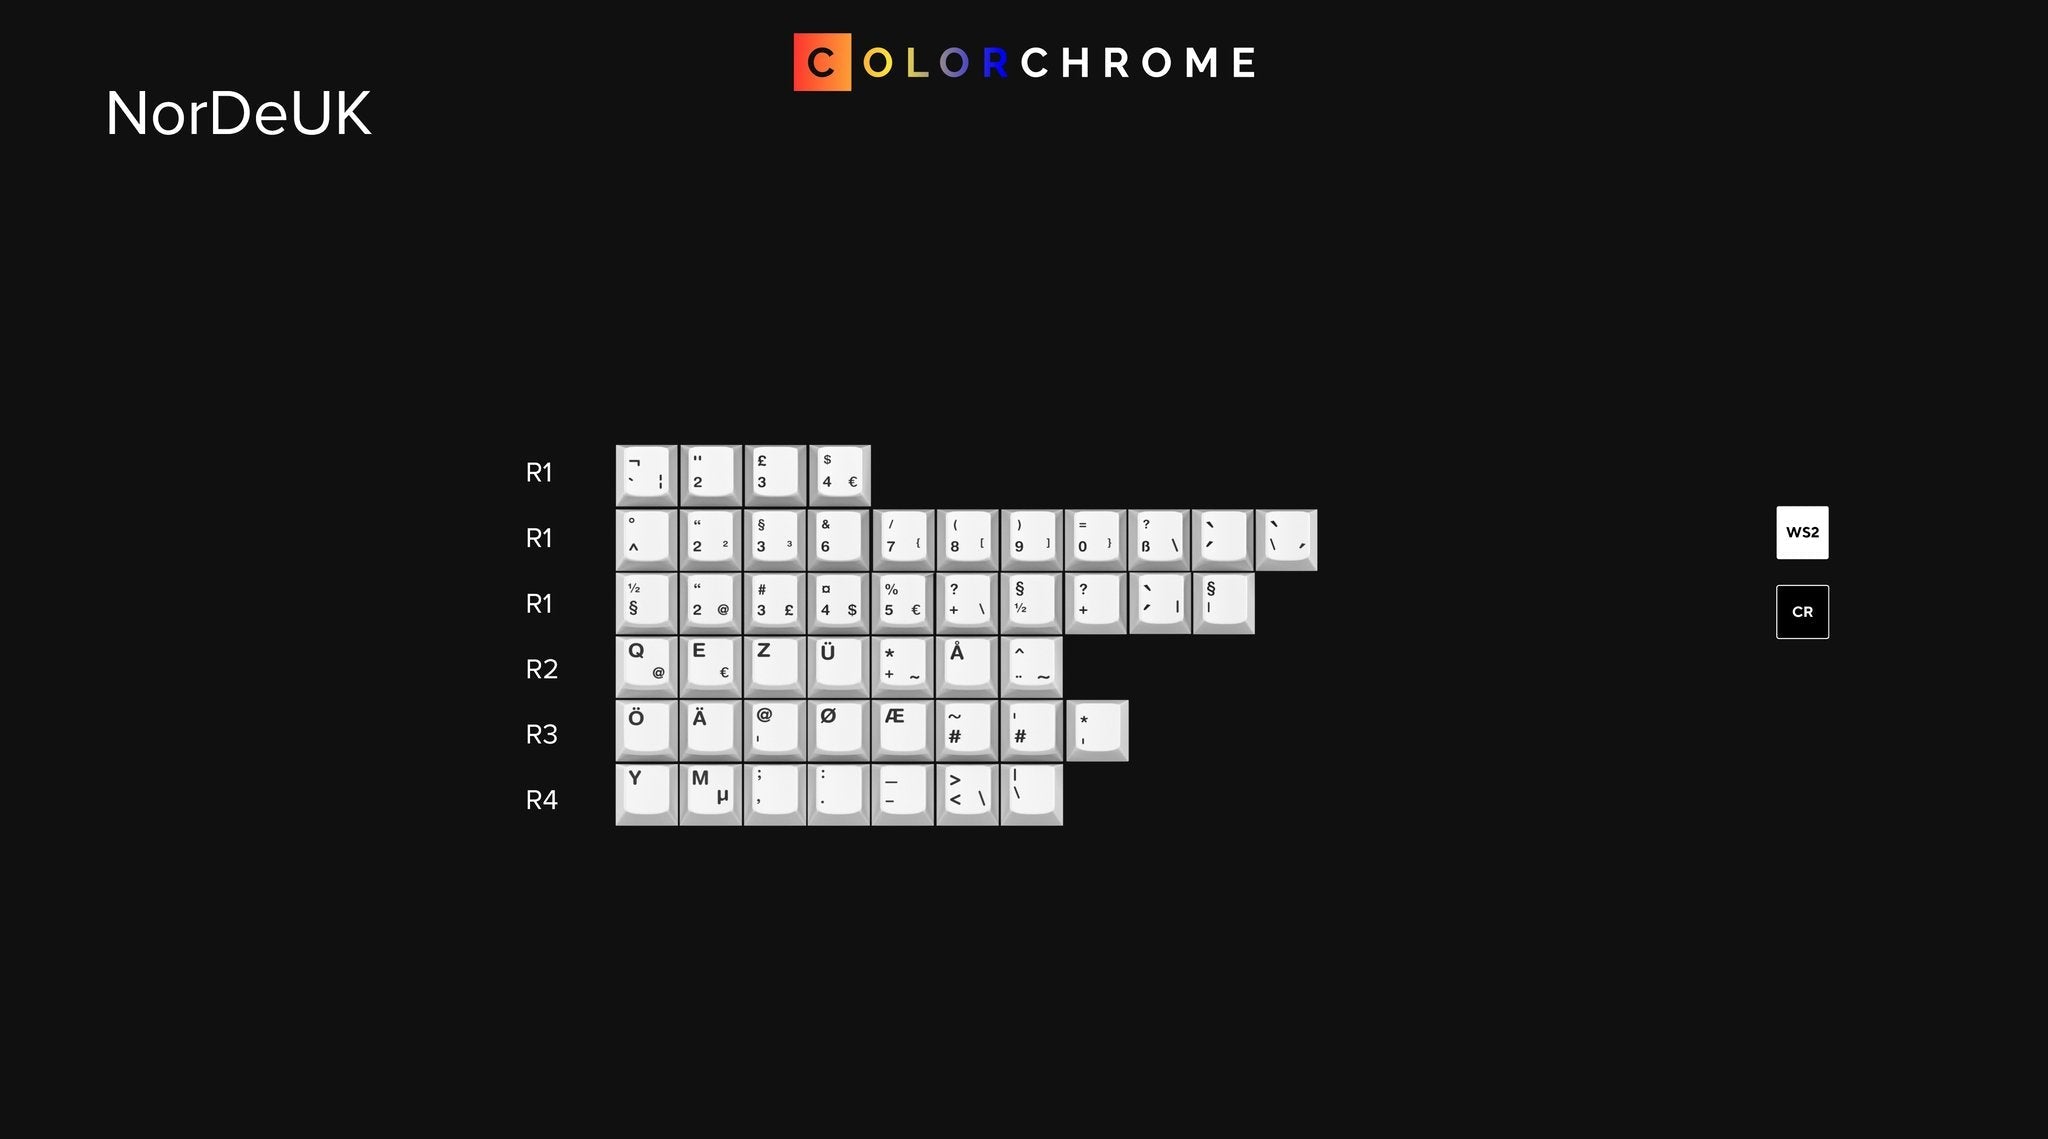 GMK CYL Colorchrome Keycaps